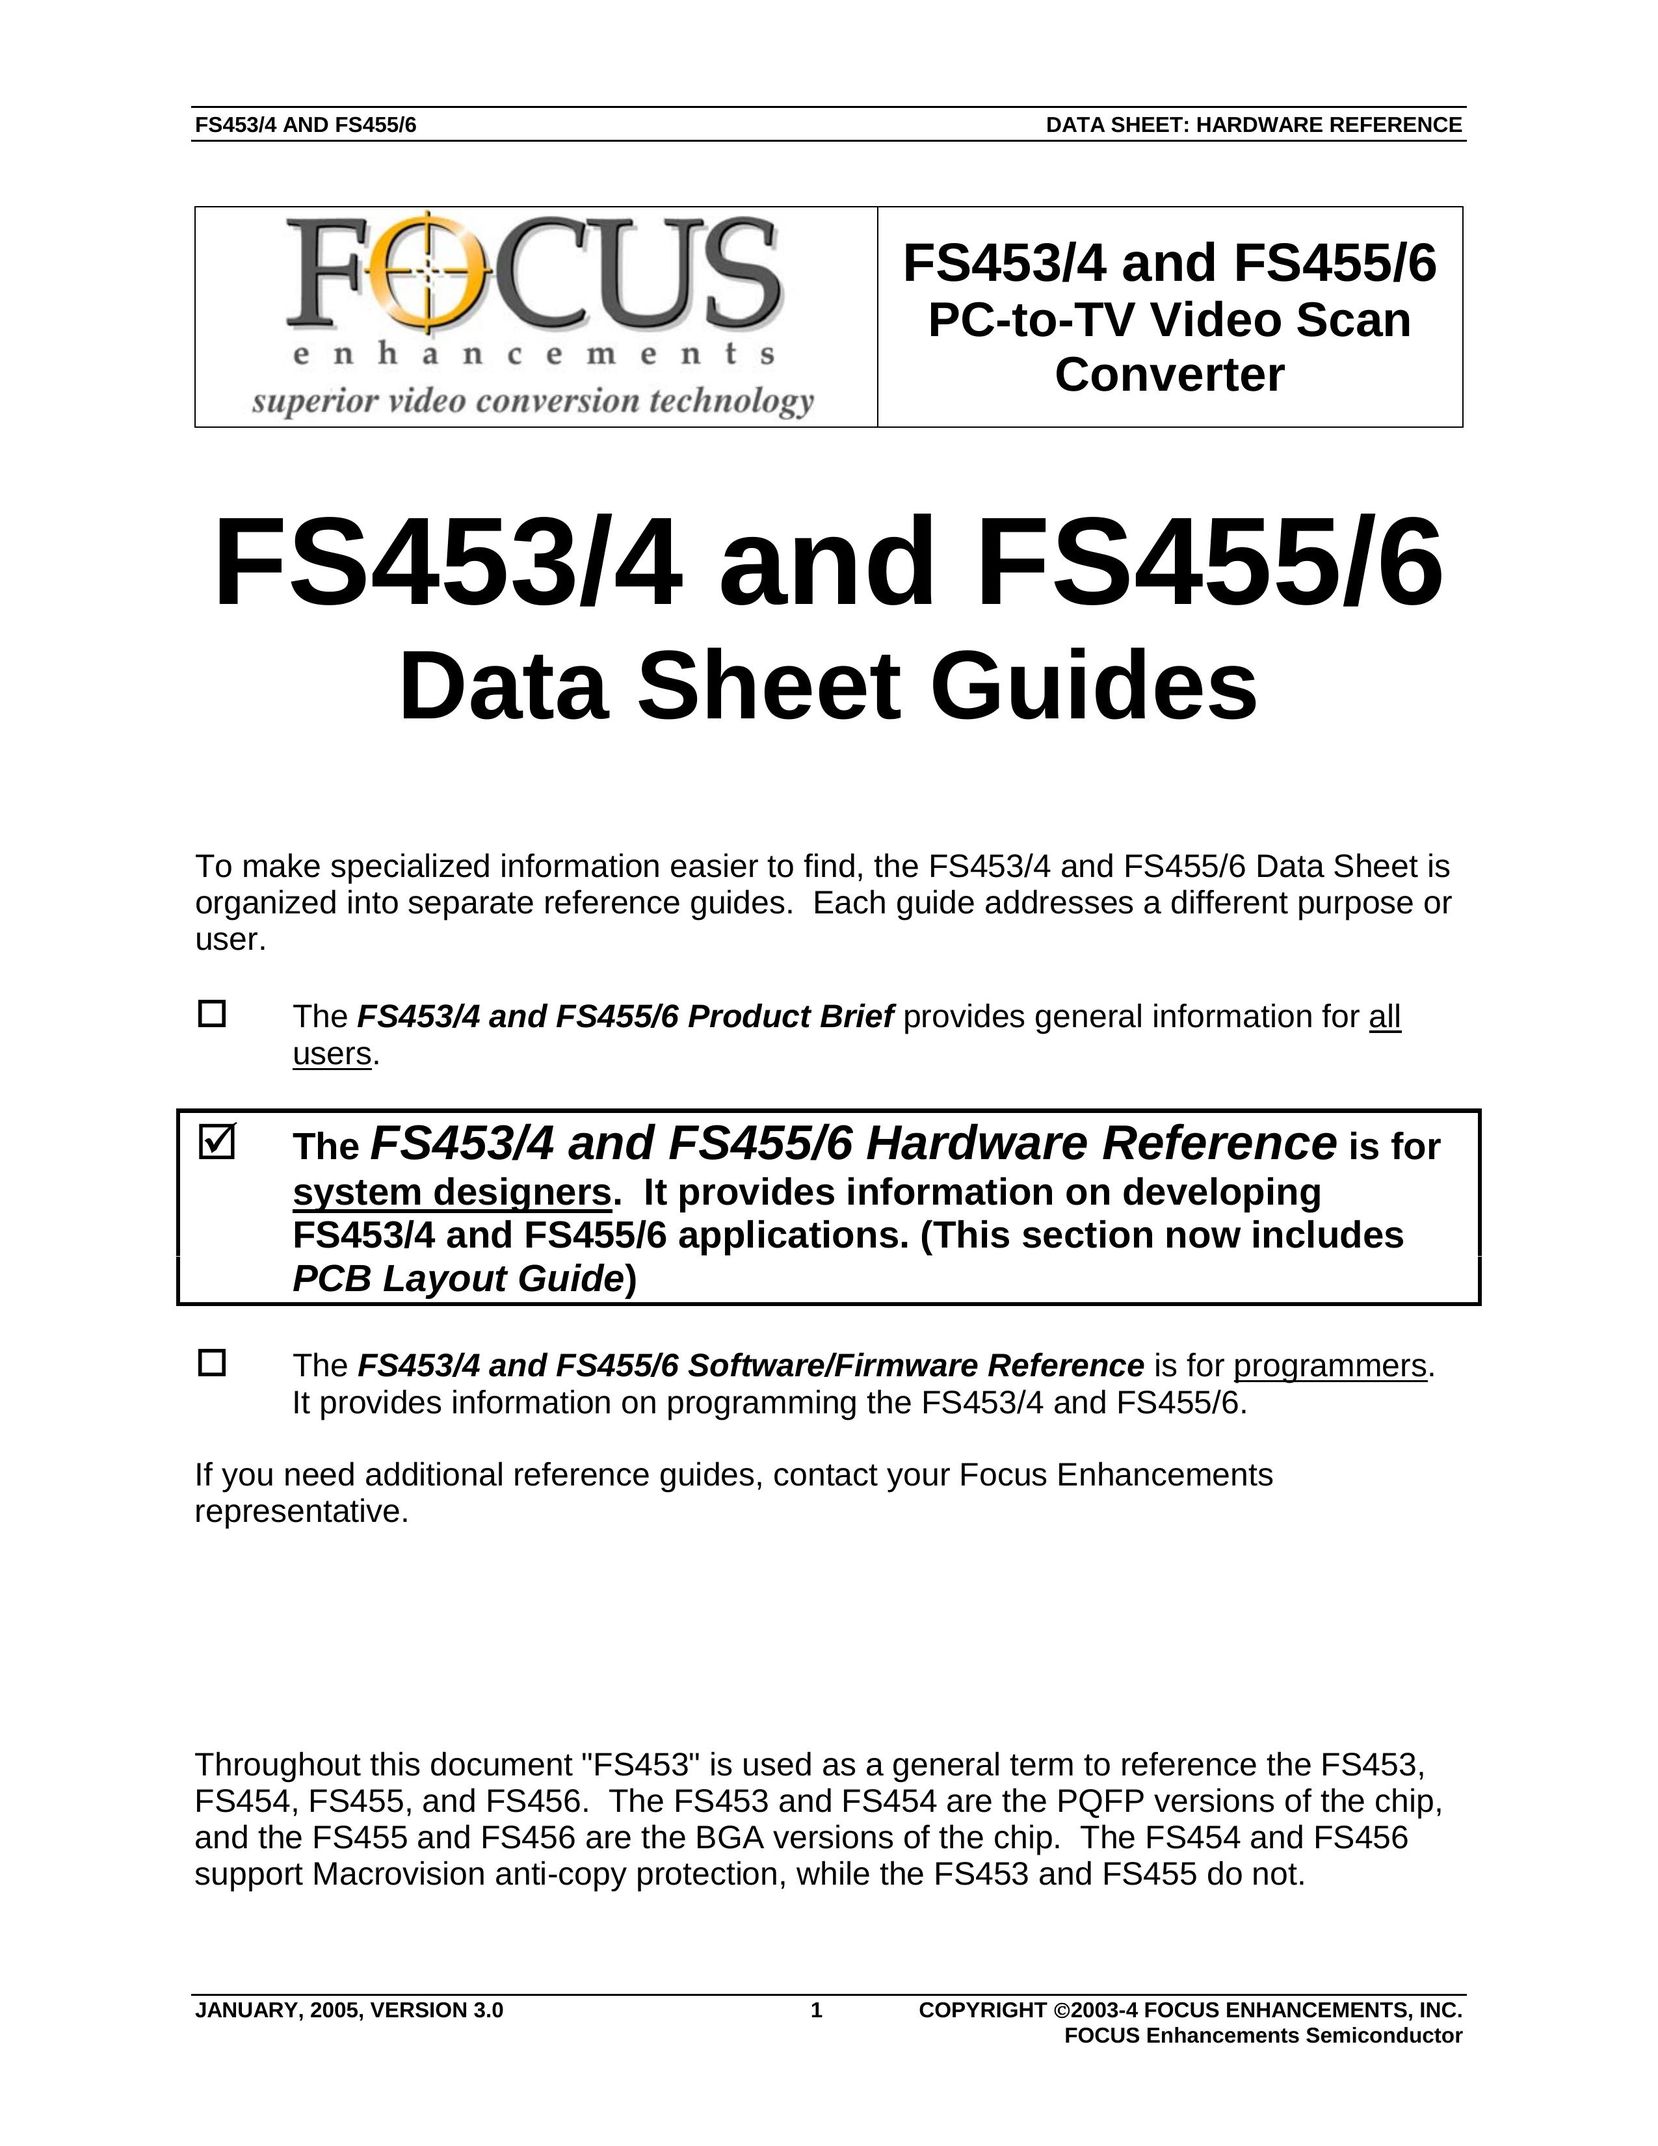 FOCUS Enhancements FS453 Network Router User Manual